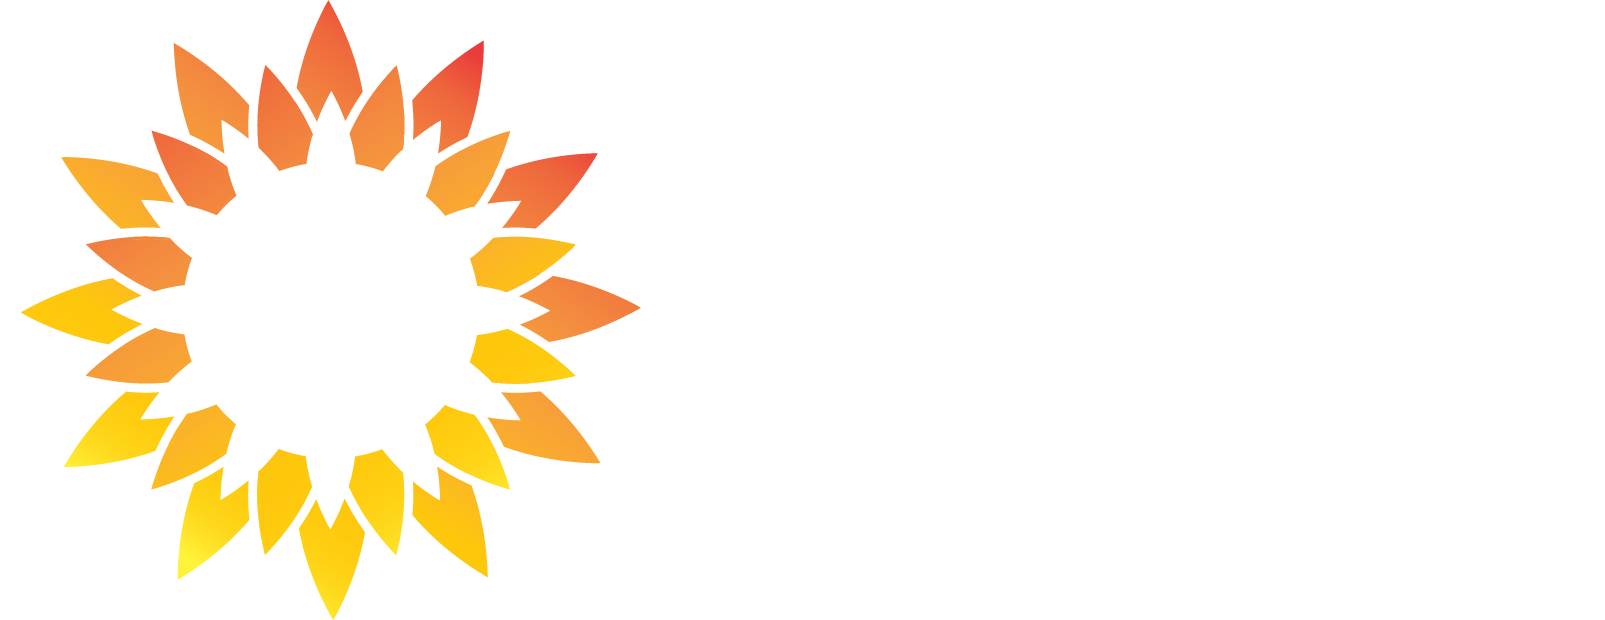 national pediatric cancer foundation logo white